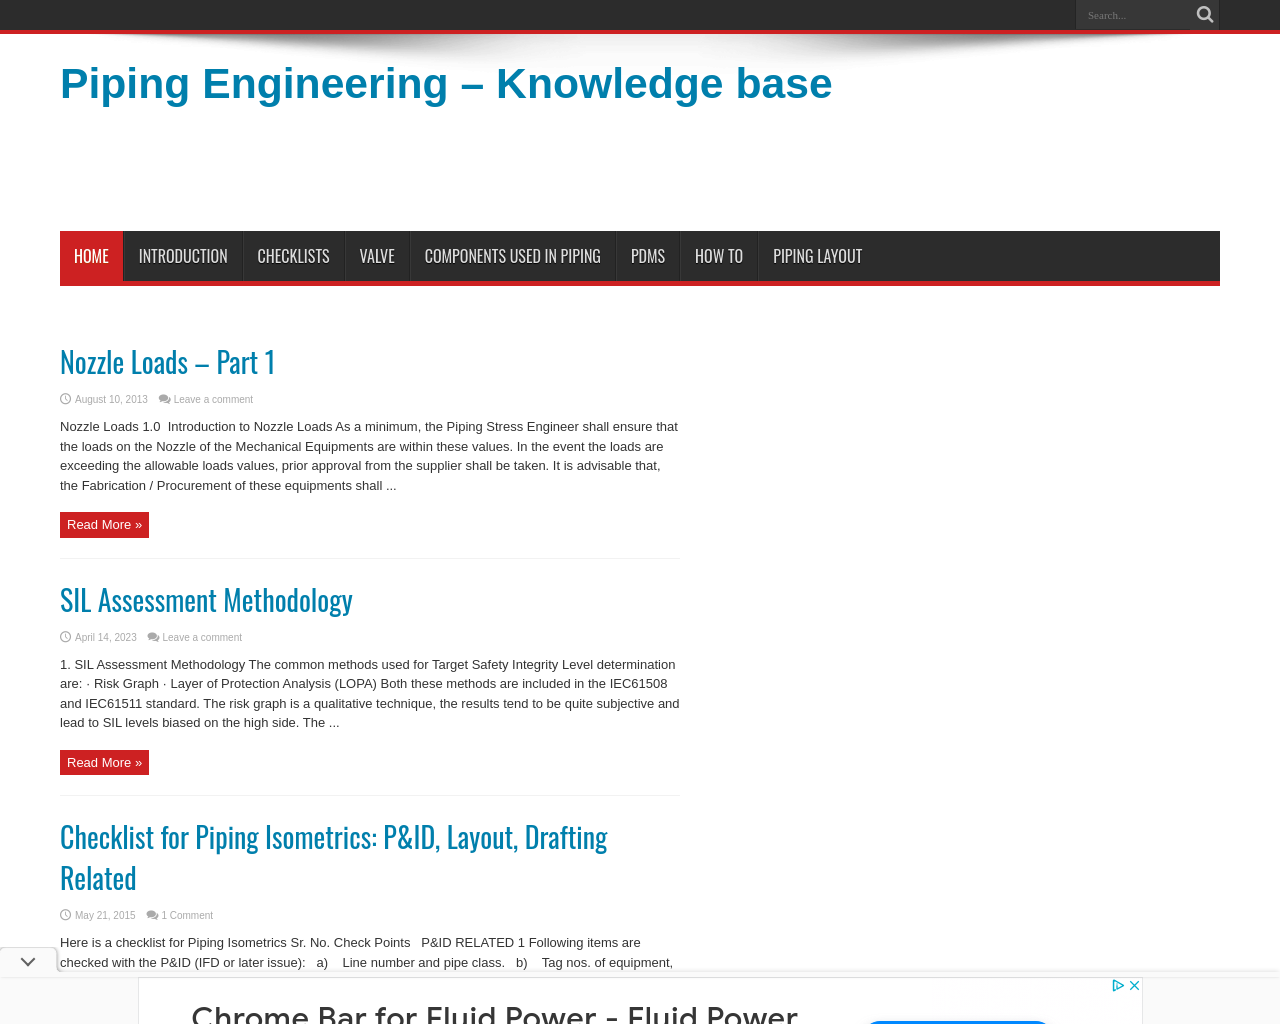 piping-engineering.com